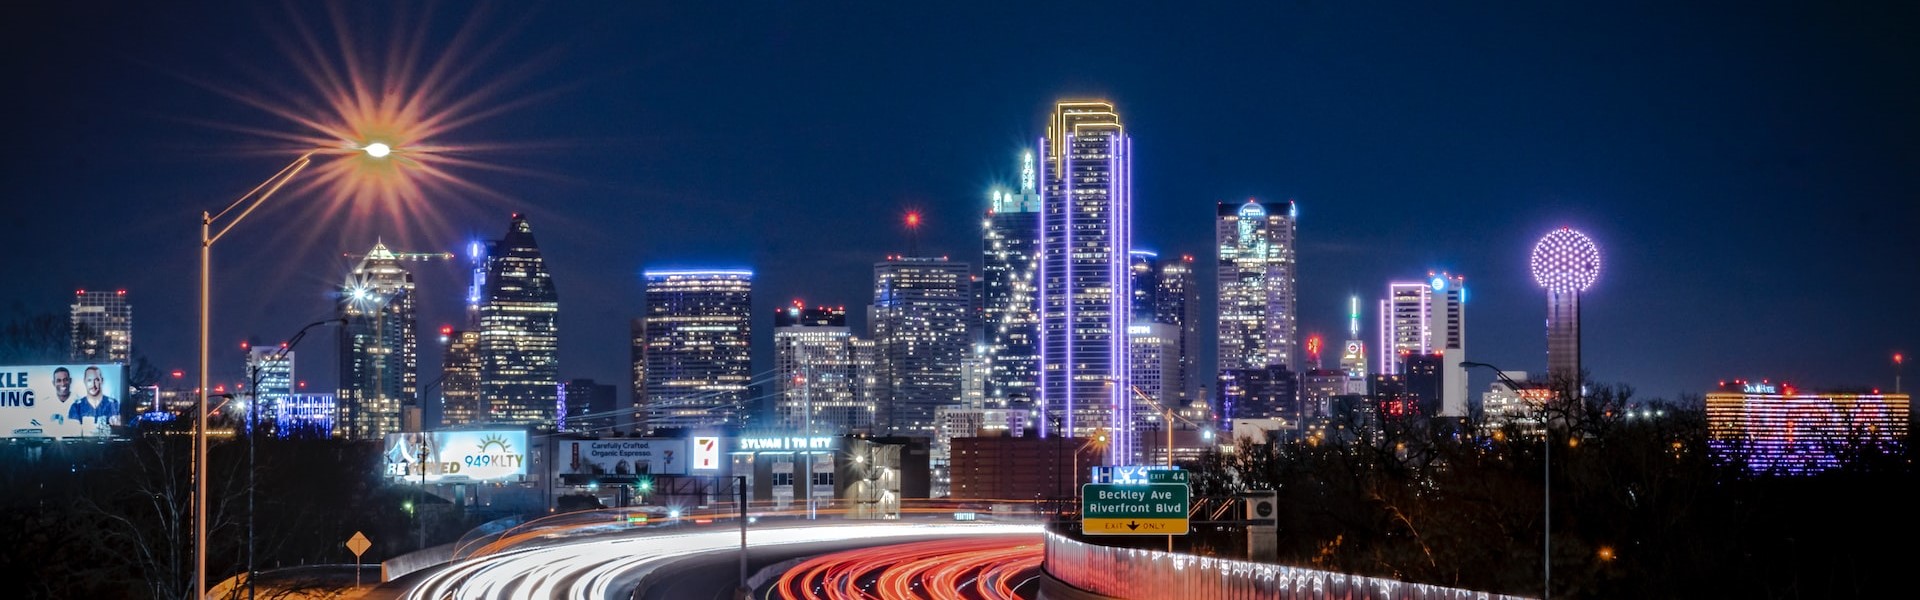 Downtown, Dallas Texas | Breast Cancer Car Donations